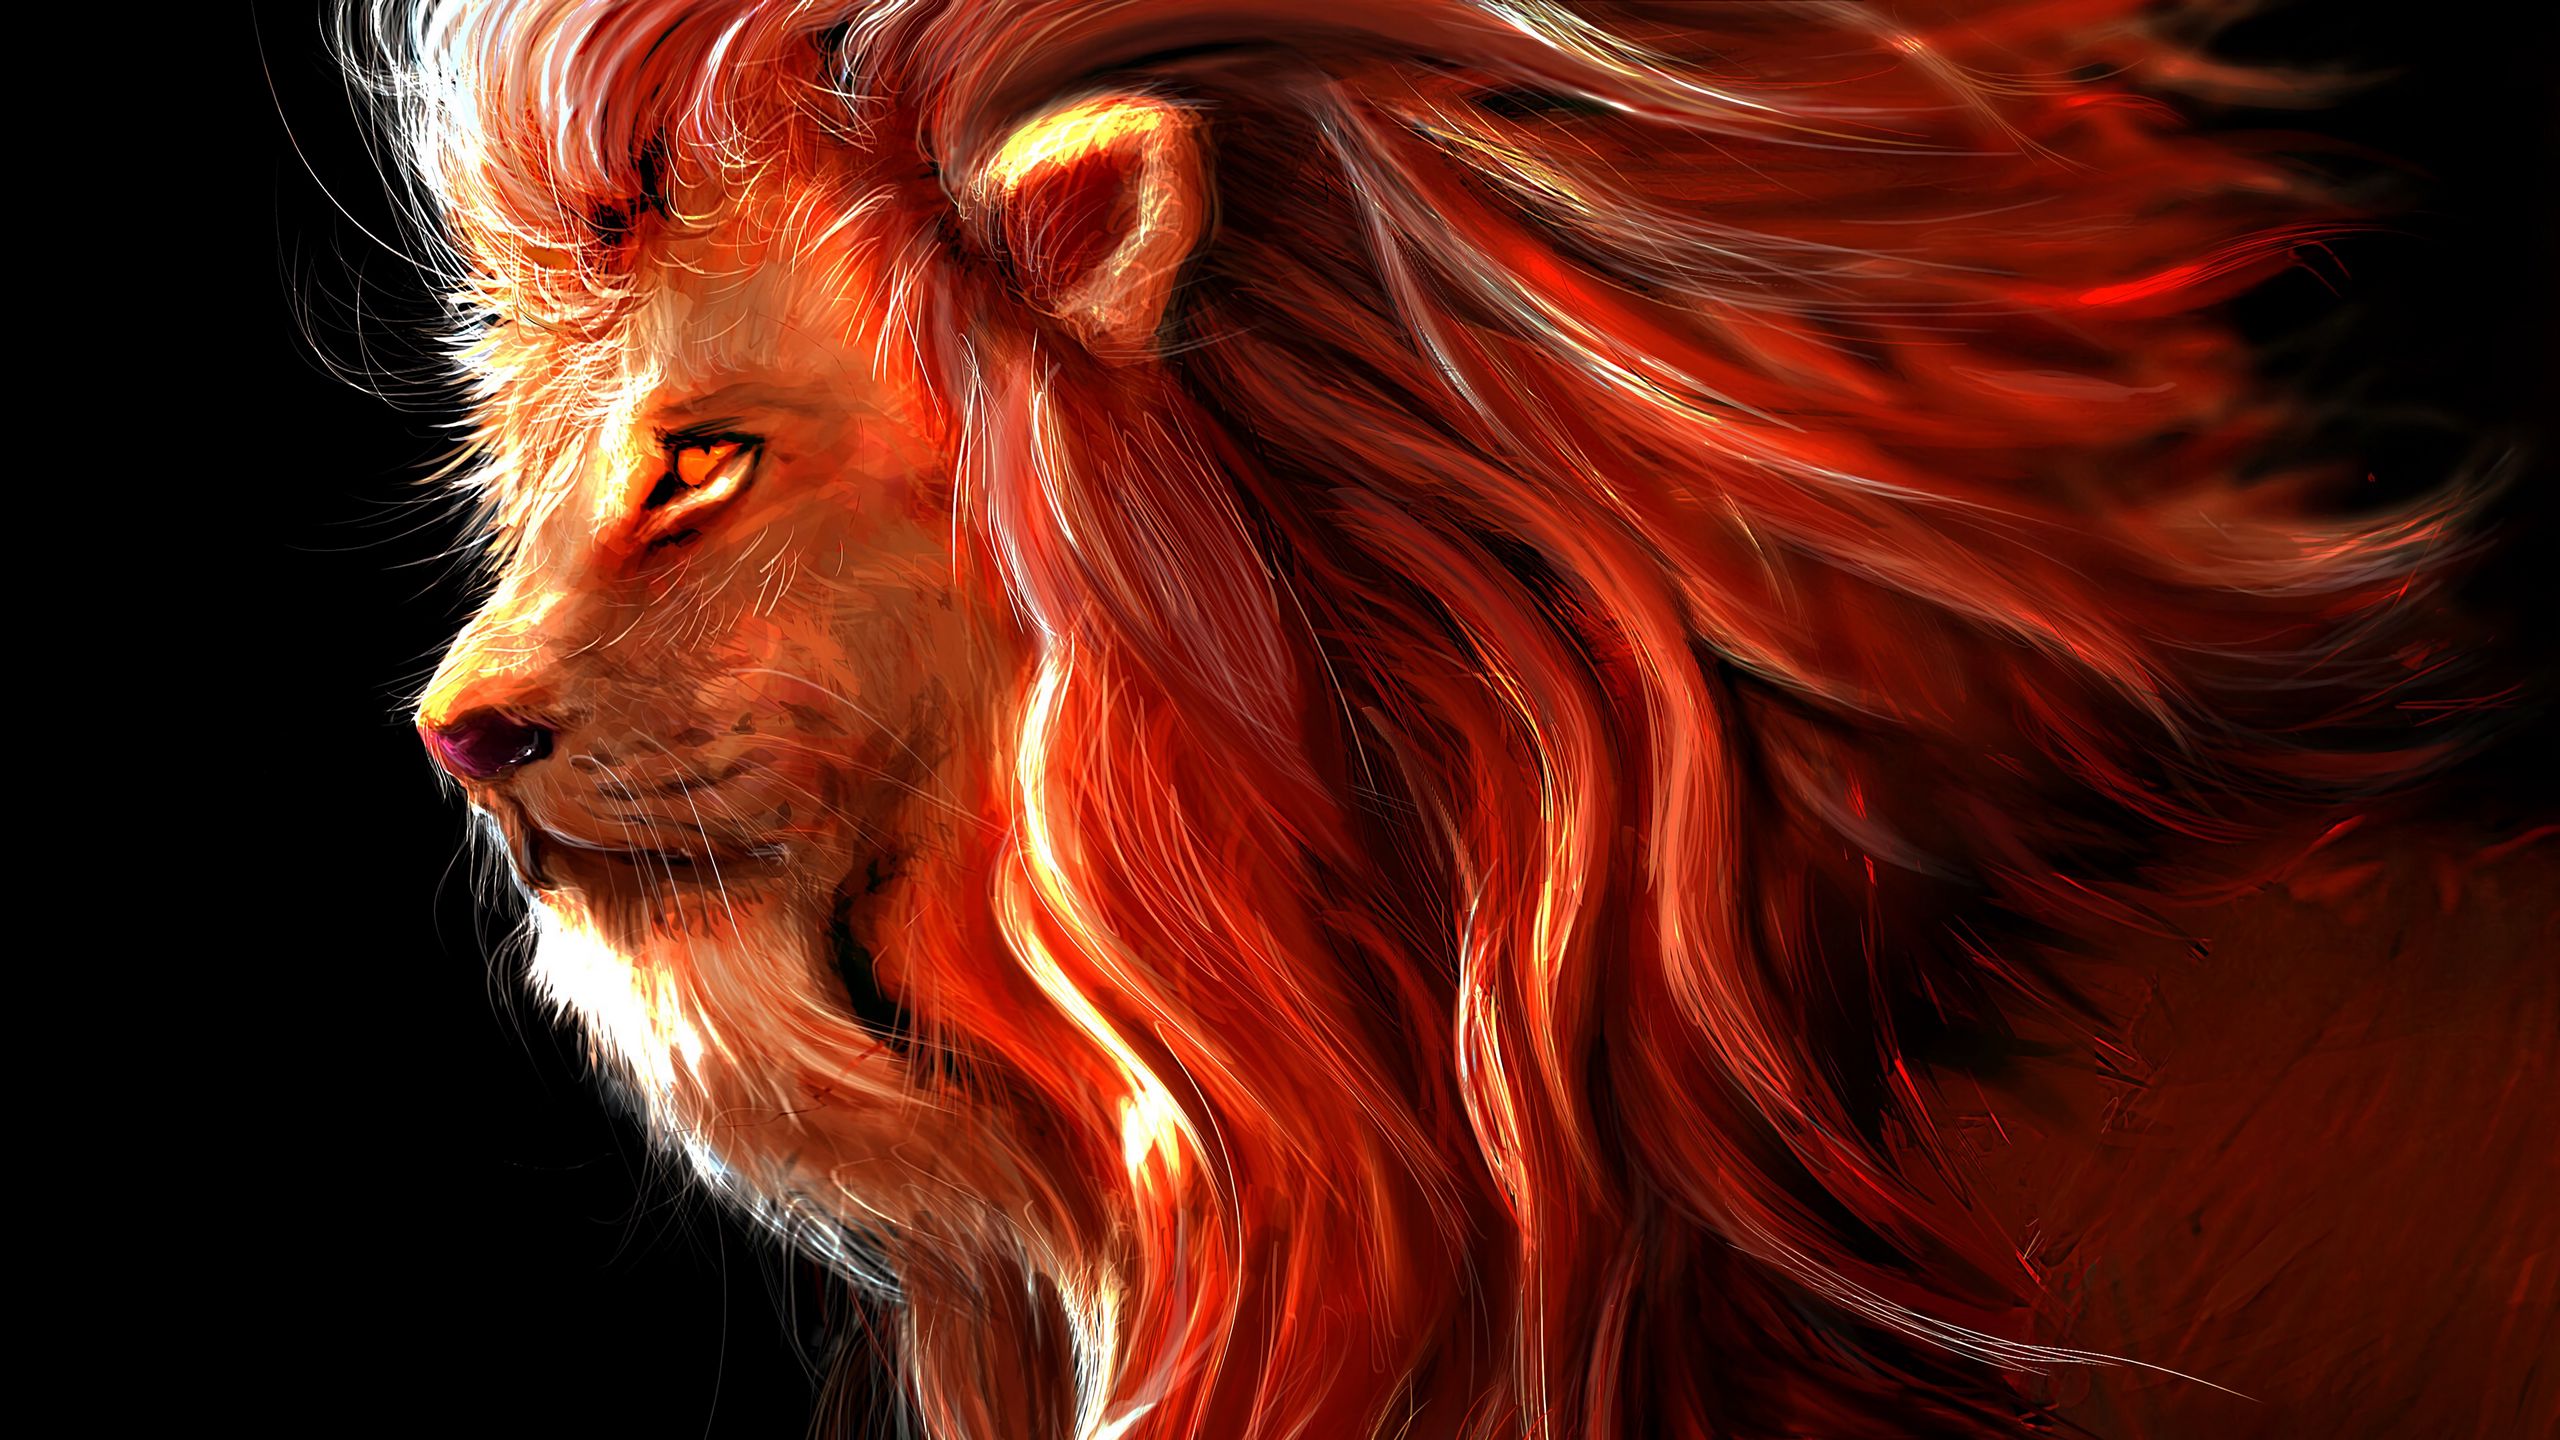 Download wallpaper 2560x1440 lion, big cat, art, predator, king of beasts  widescreen 16:9 hd background